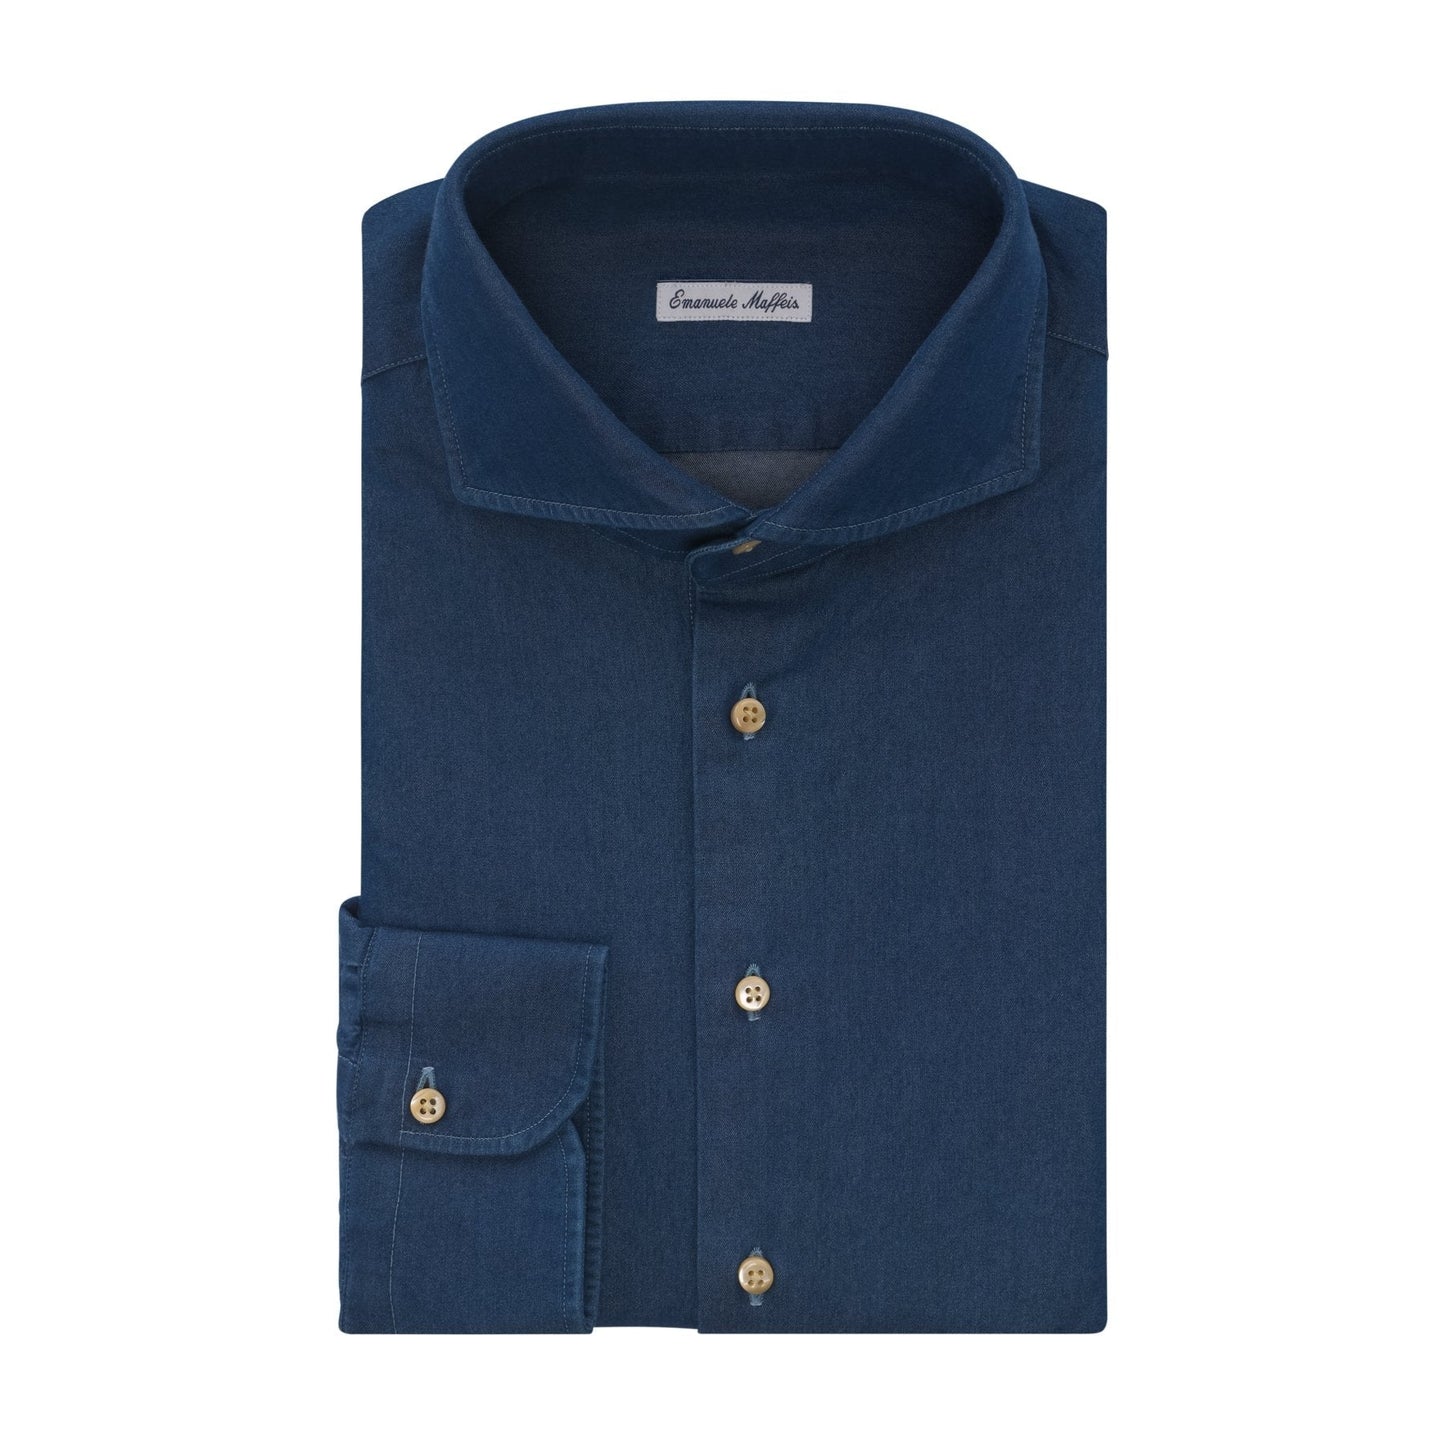 Emanuele Maffeis Cotton Denim Blue Shirt with Shark Collar - SARTALE